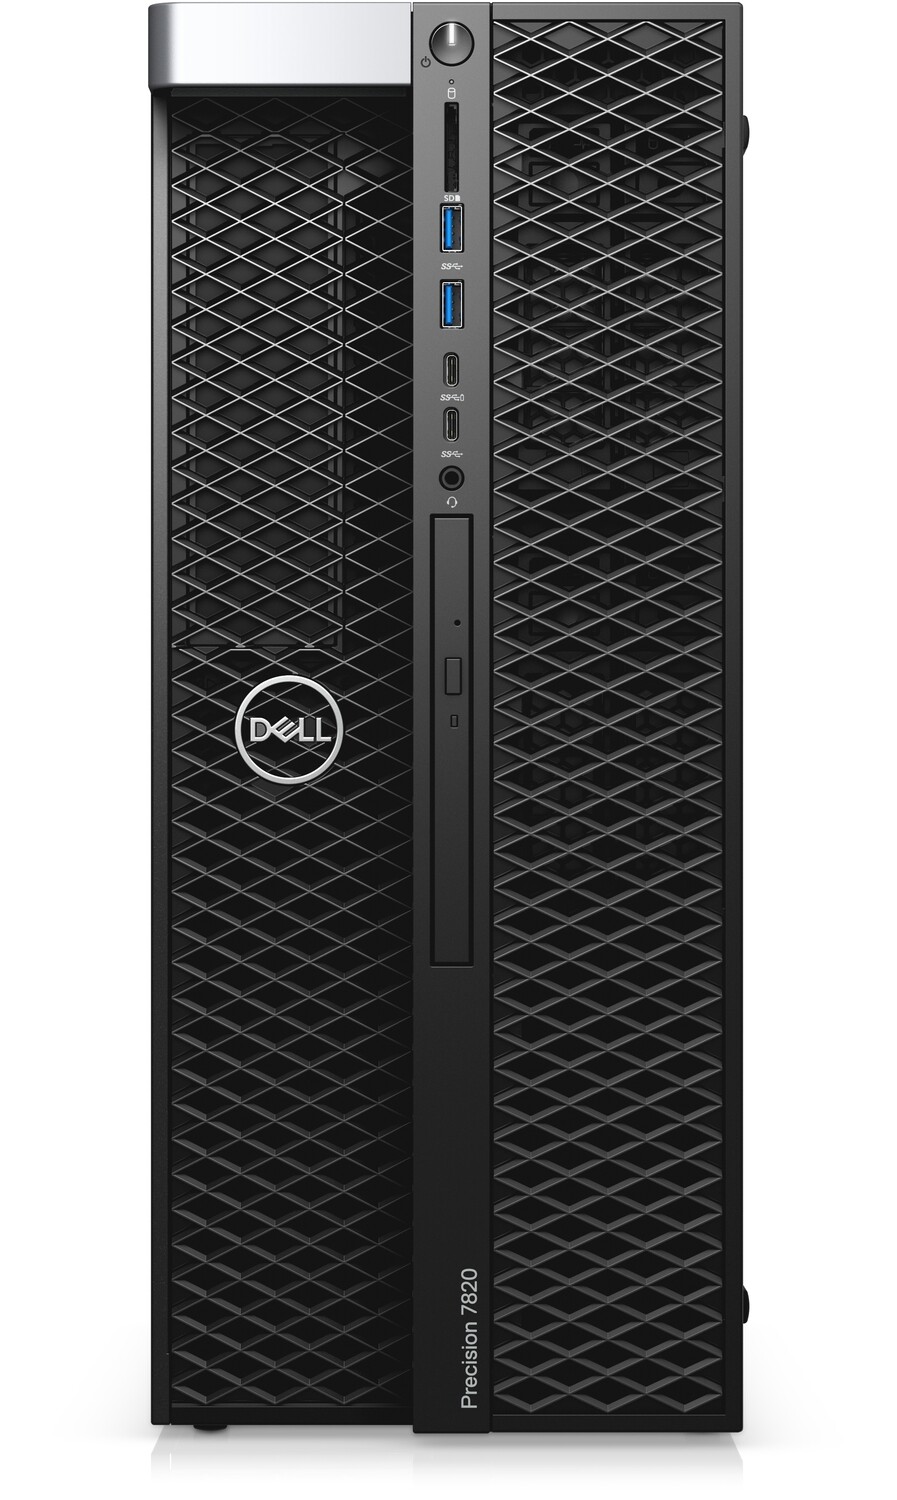 Dell Precision 7820 Tower Dual 8 Core Intel Xeon Bronze 3106 (Total 16 Cores) | 32GB | 500 GB | Quadro 2000 | Windows 10 Pro for Workstations | 210-AMDT